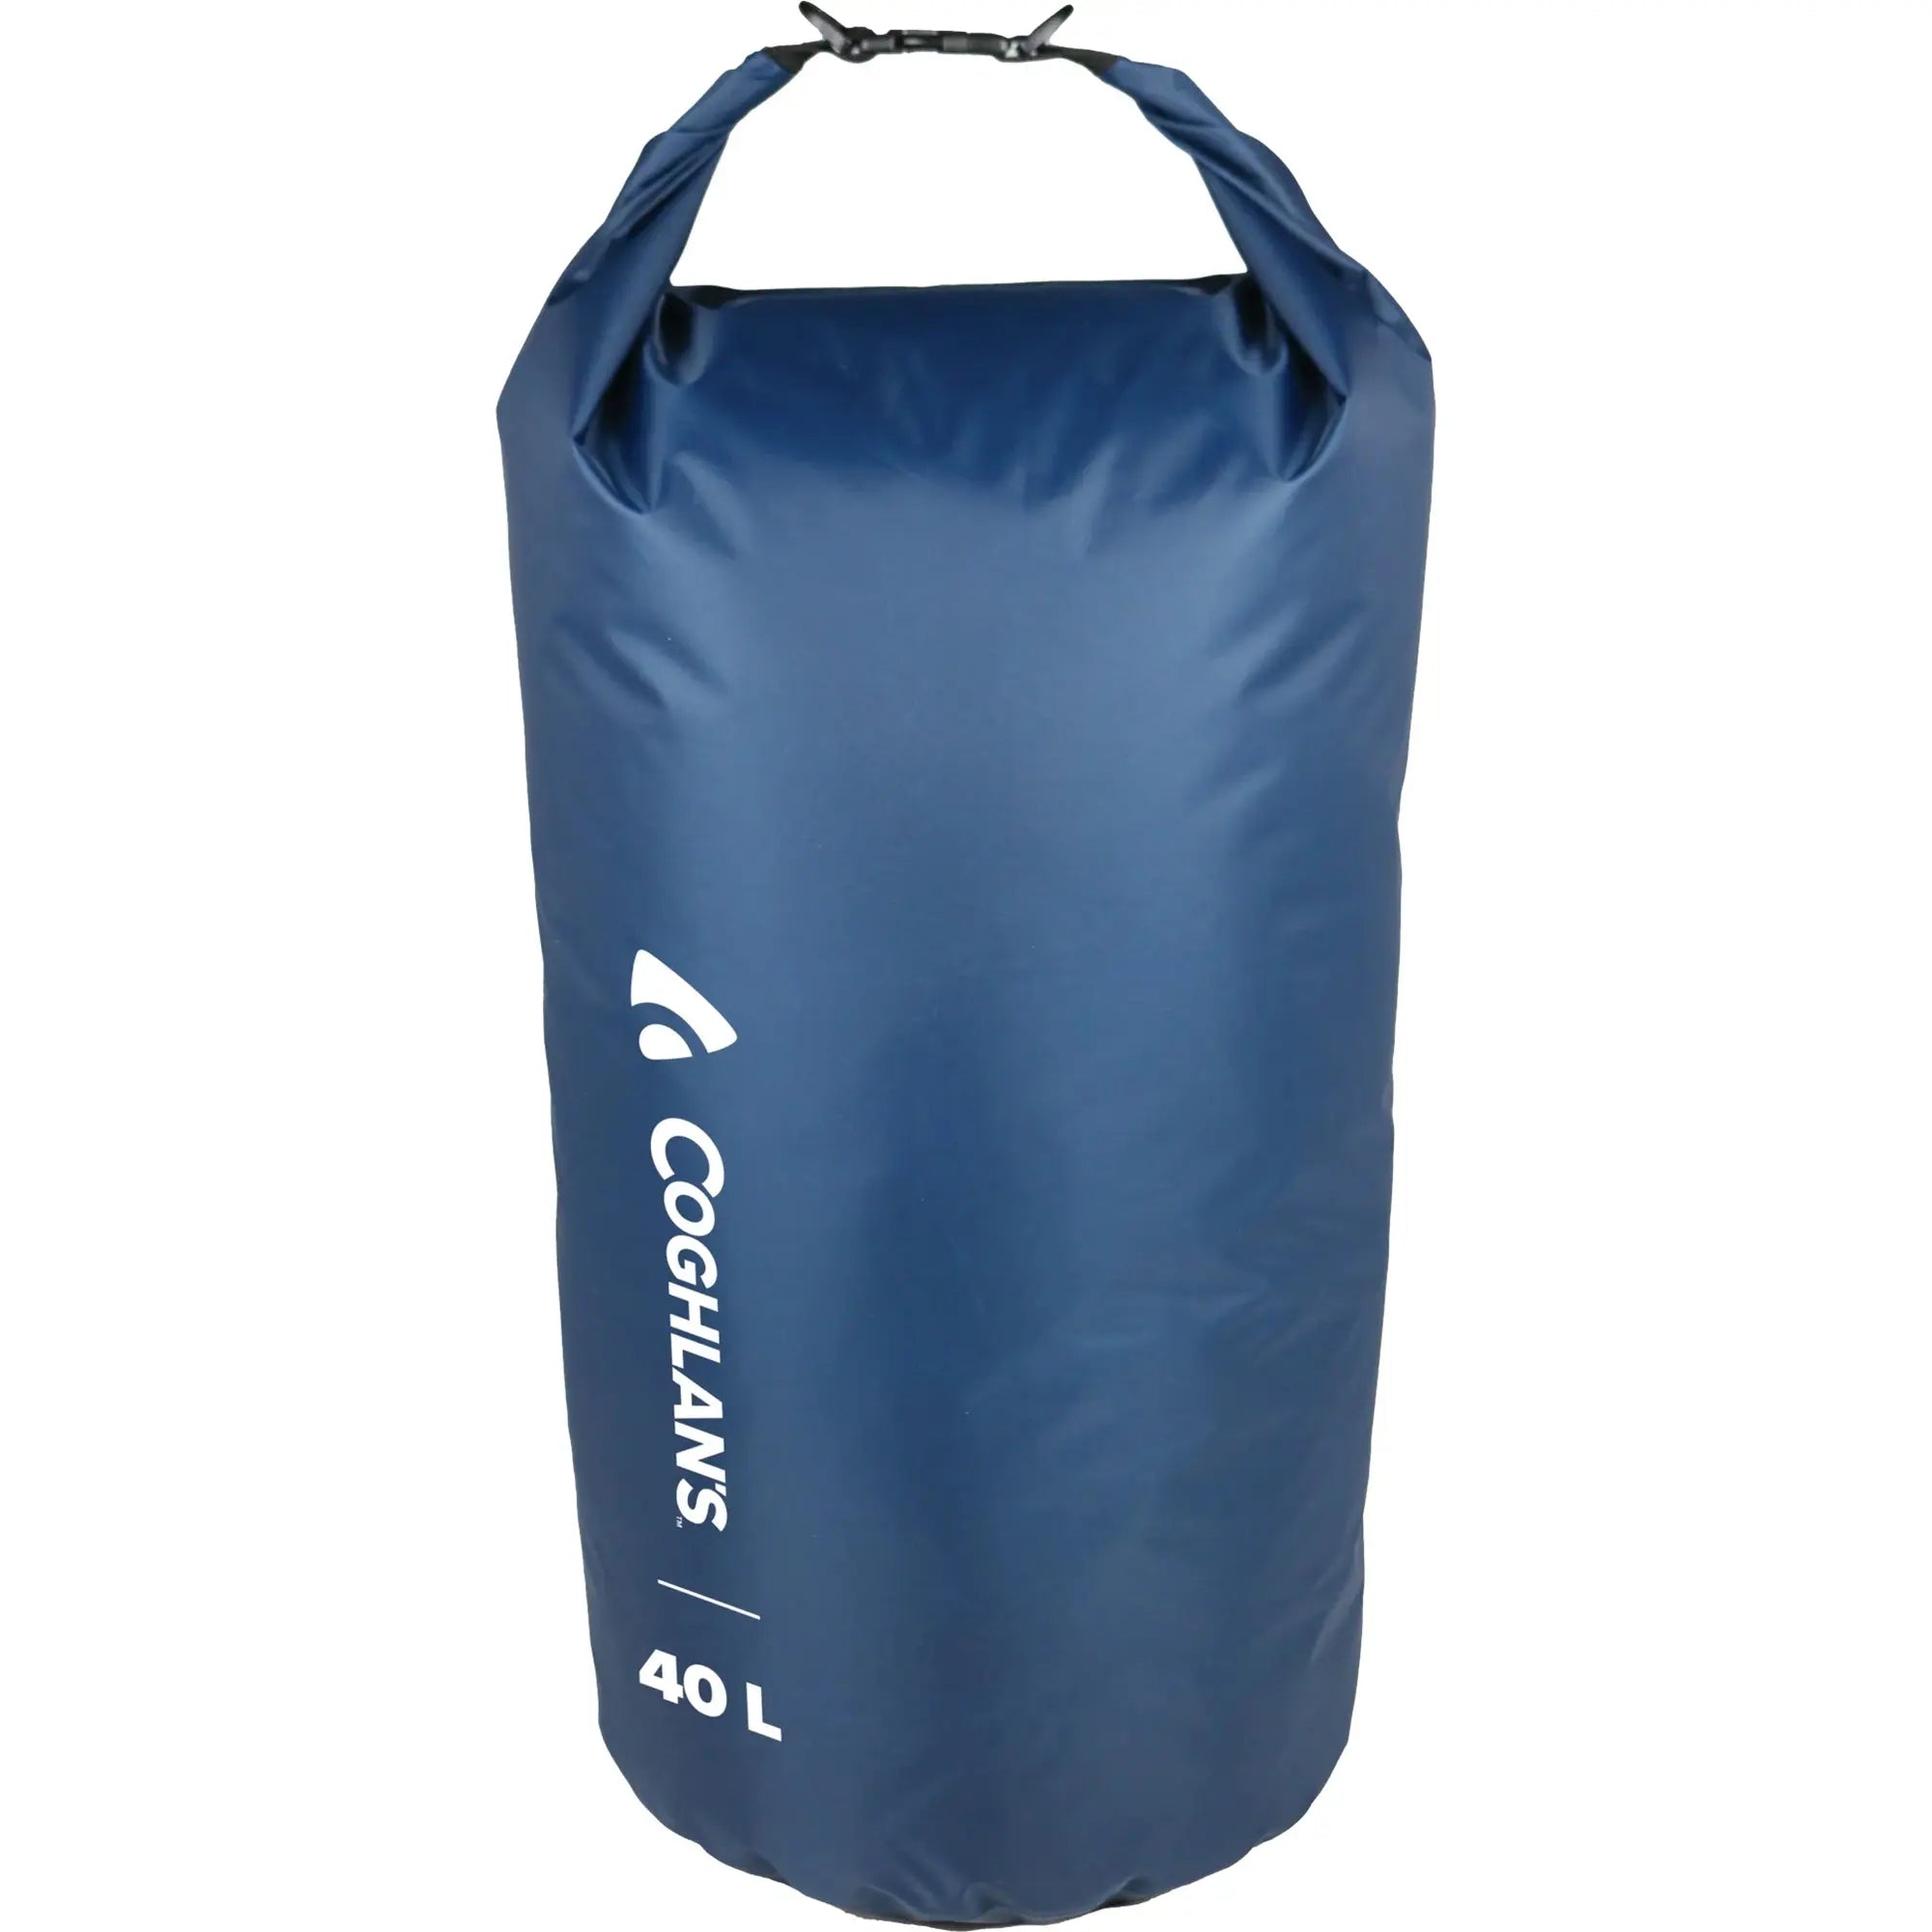 Coghlan's Lightweight Dry Bag - 40L Coghlan's